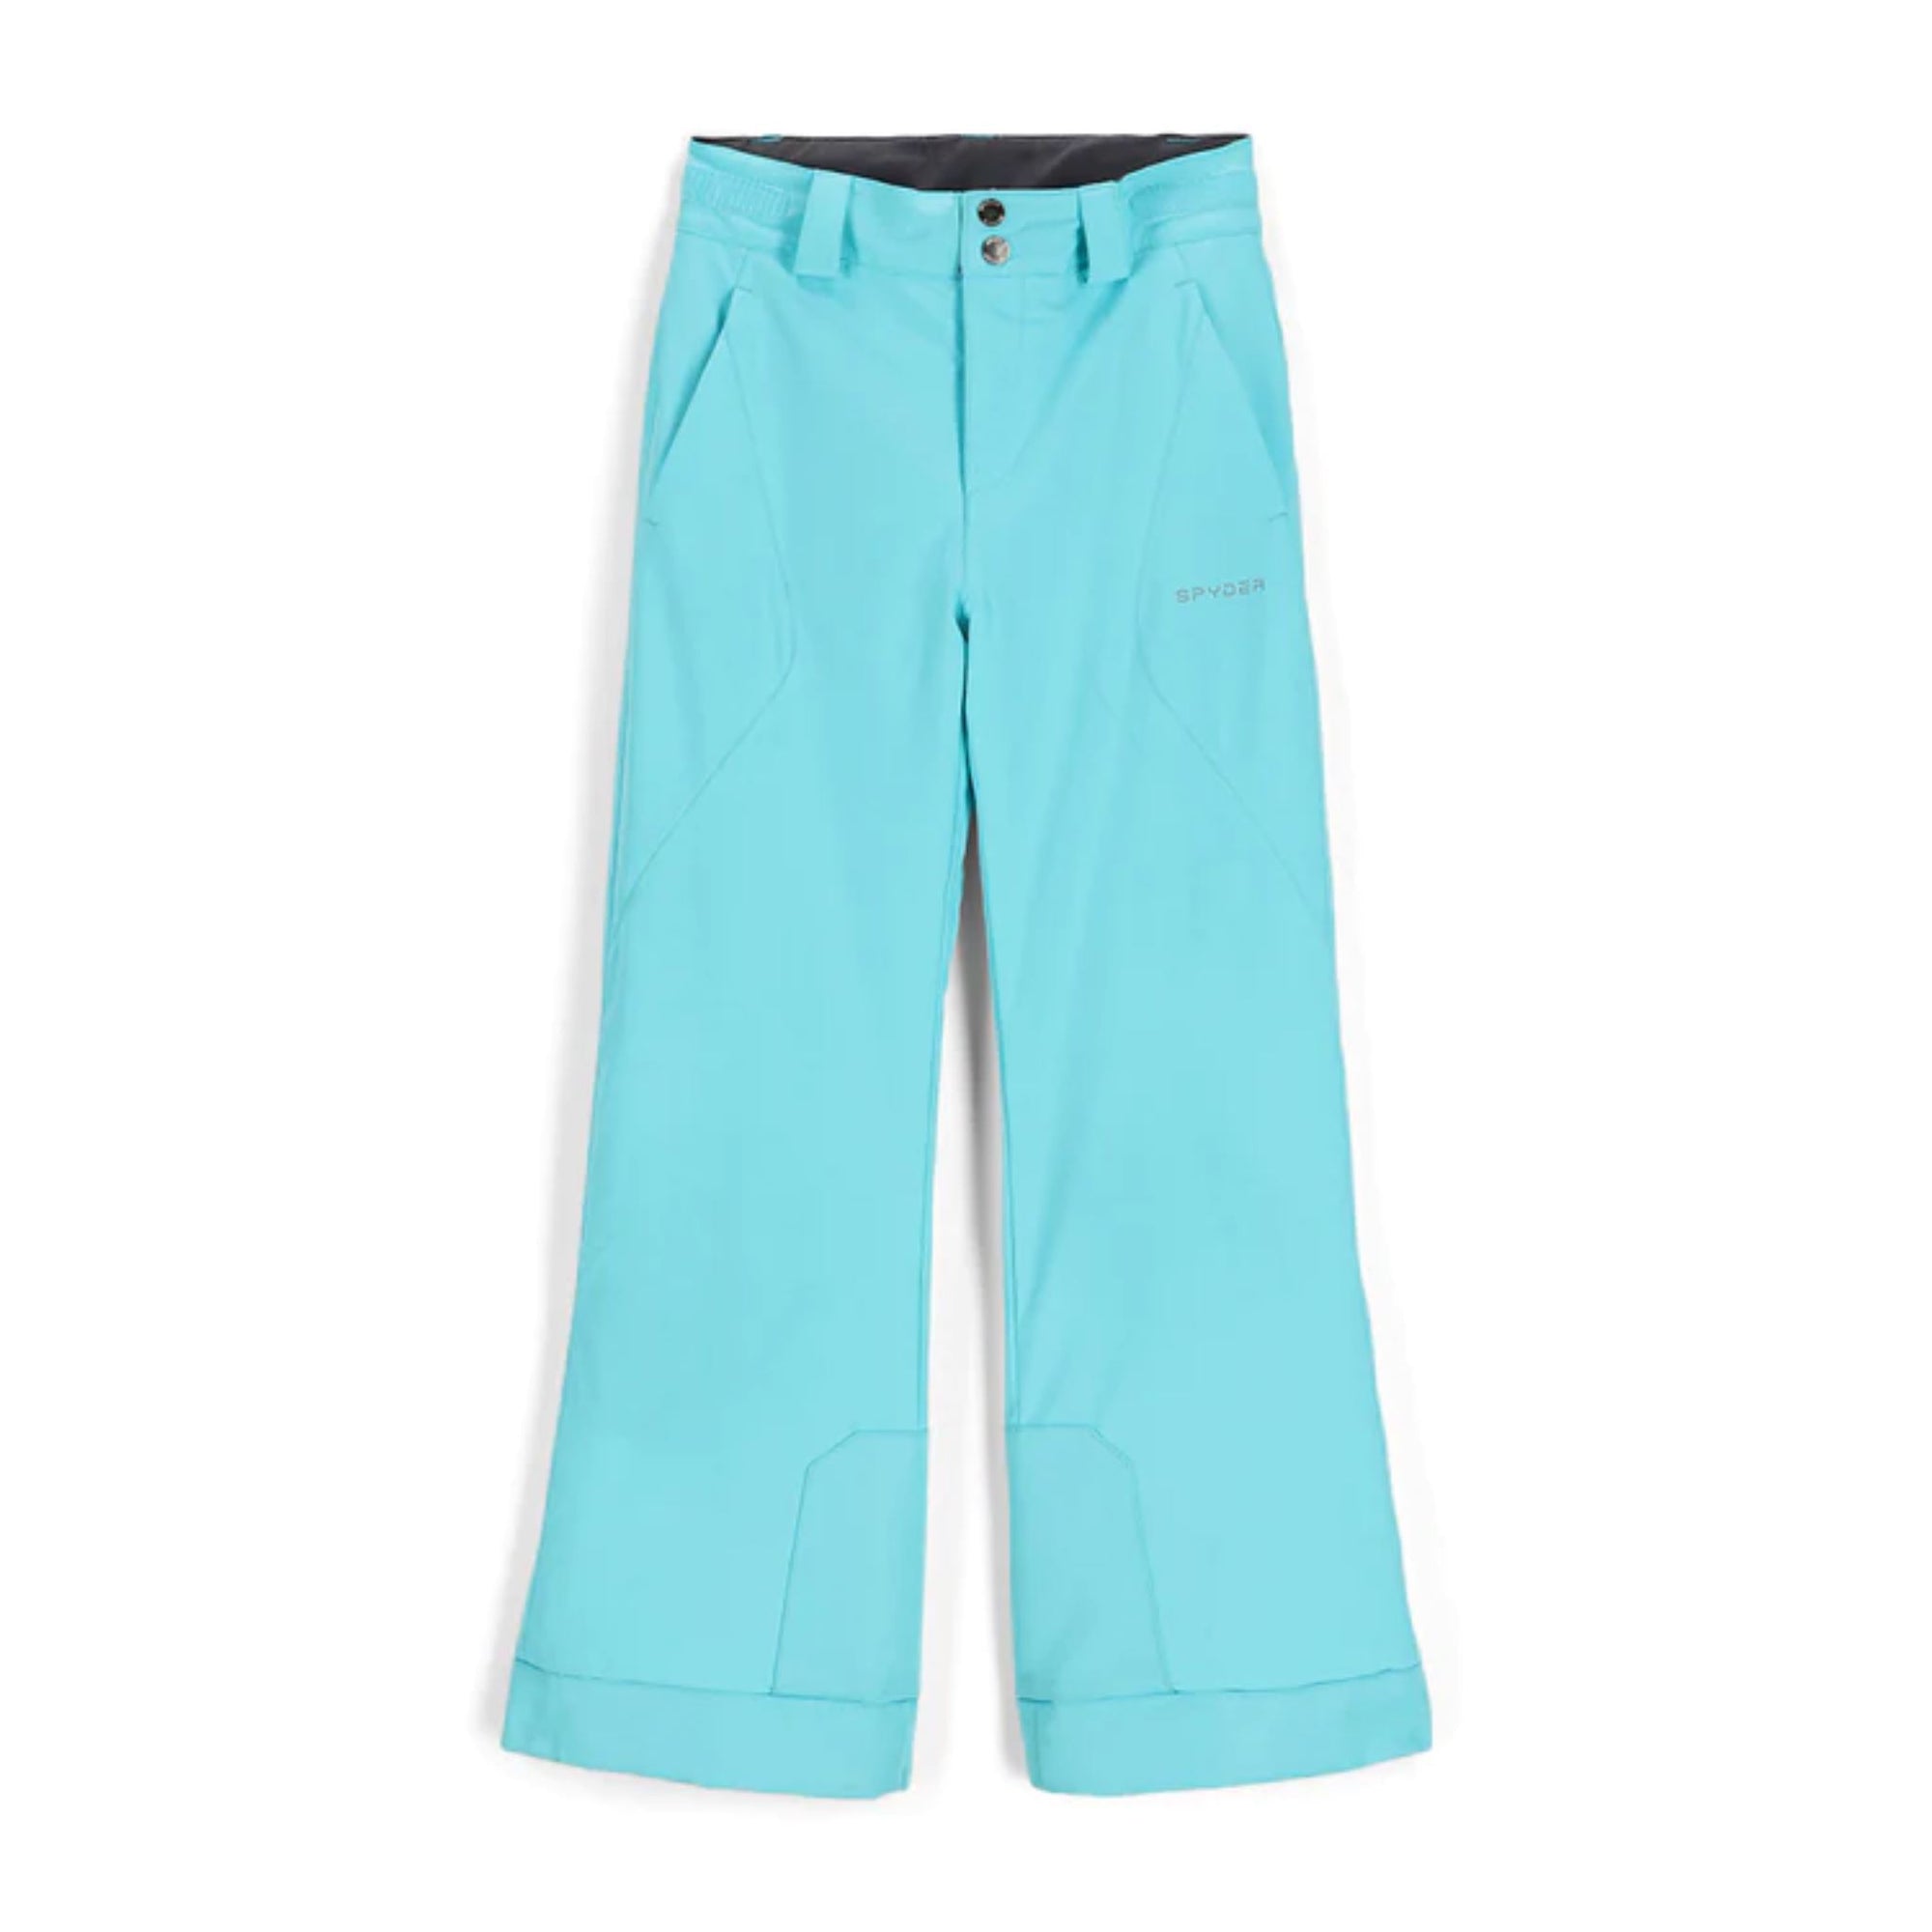 Girls Spyder Olympia Pants - Bahama Blue Pants Spyder 8 INTL / 8 AU 